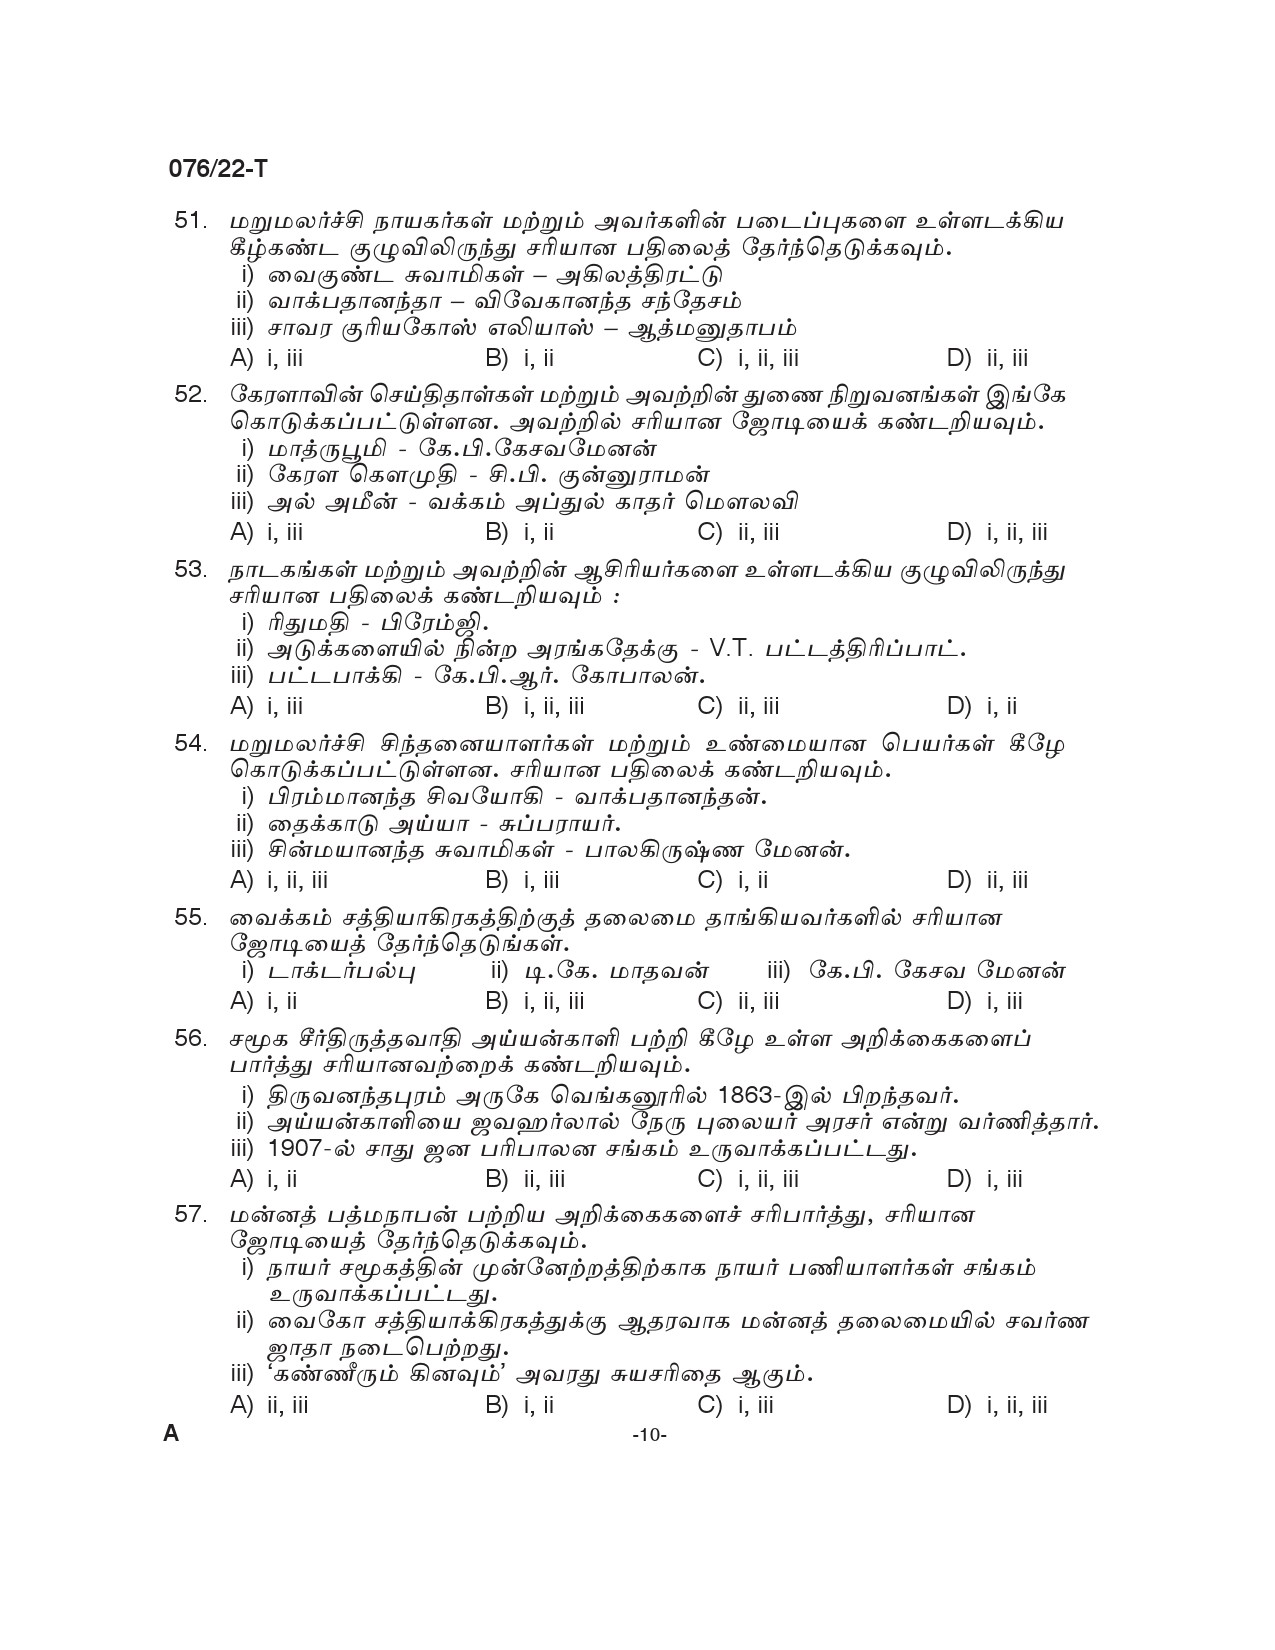 Common Preliminary Exam 2022 Upto SSLC Level Stage V Tamil 0762022 T 9